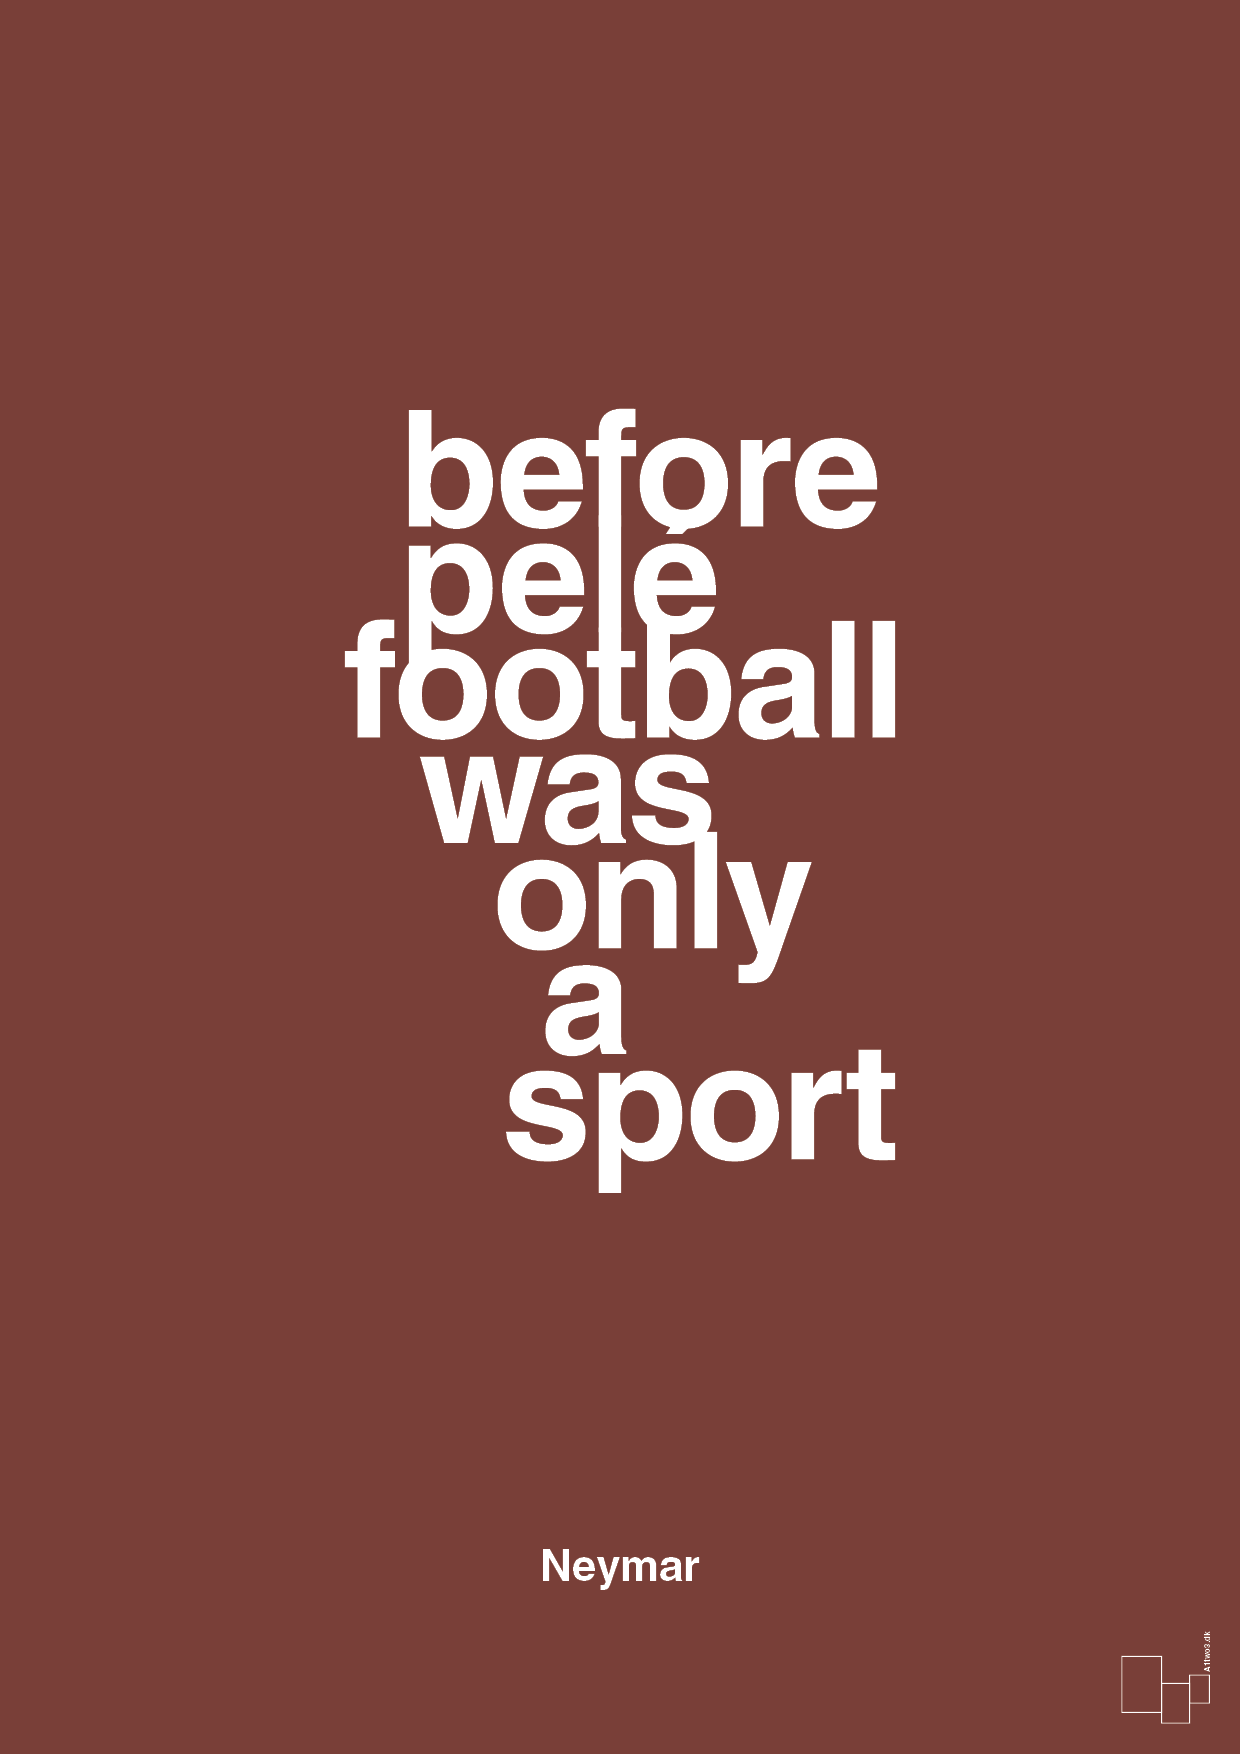 before pelé football was only a sport - Plakat med Citater i Red Pepper